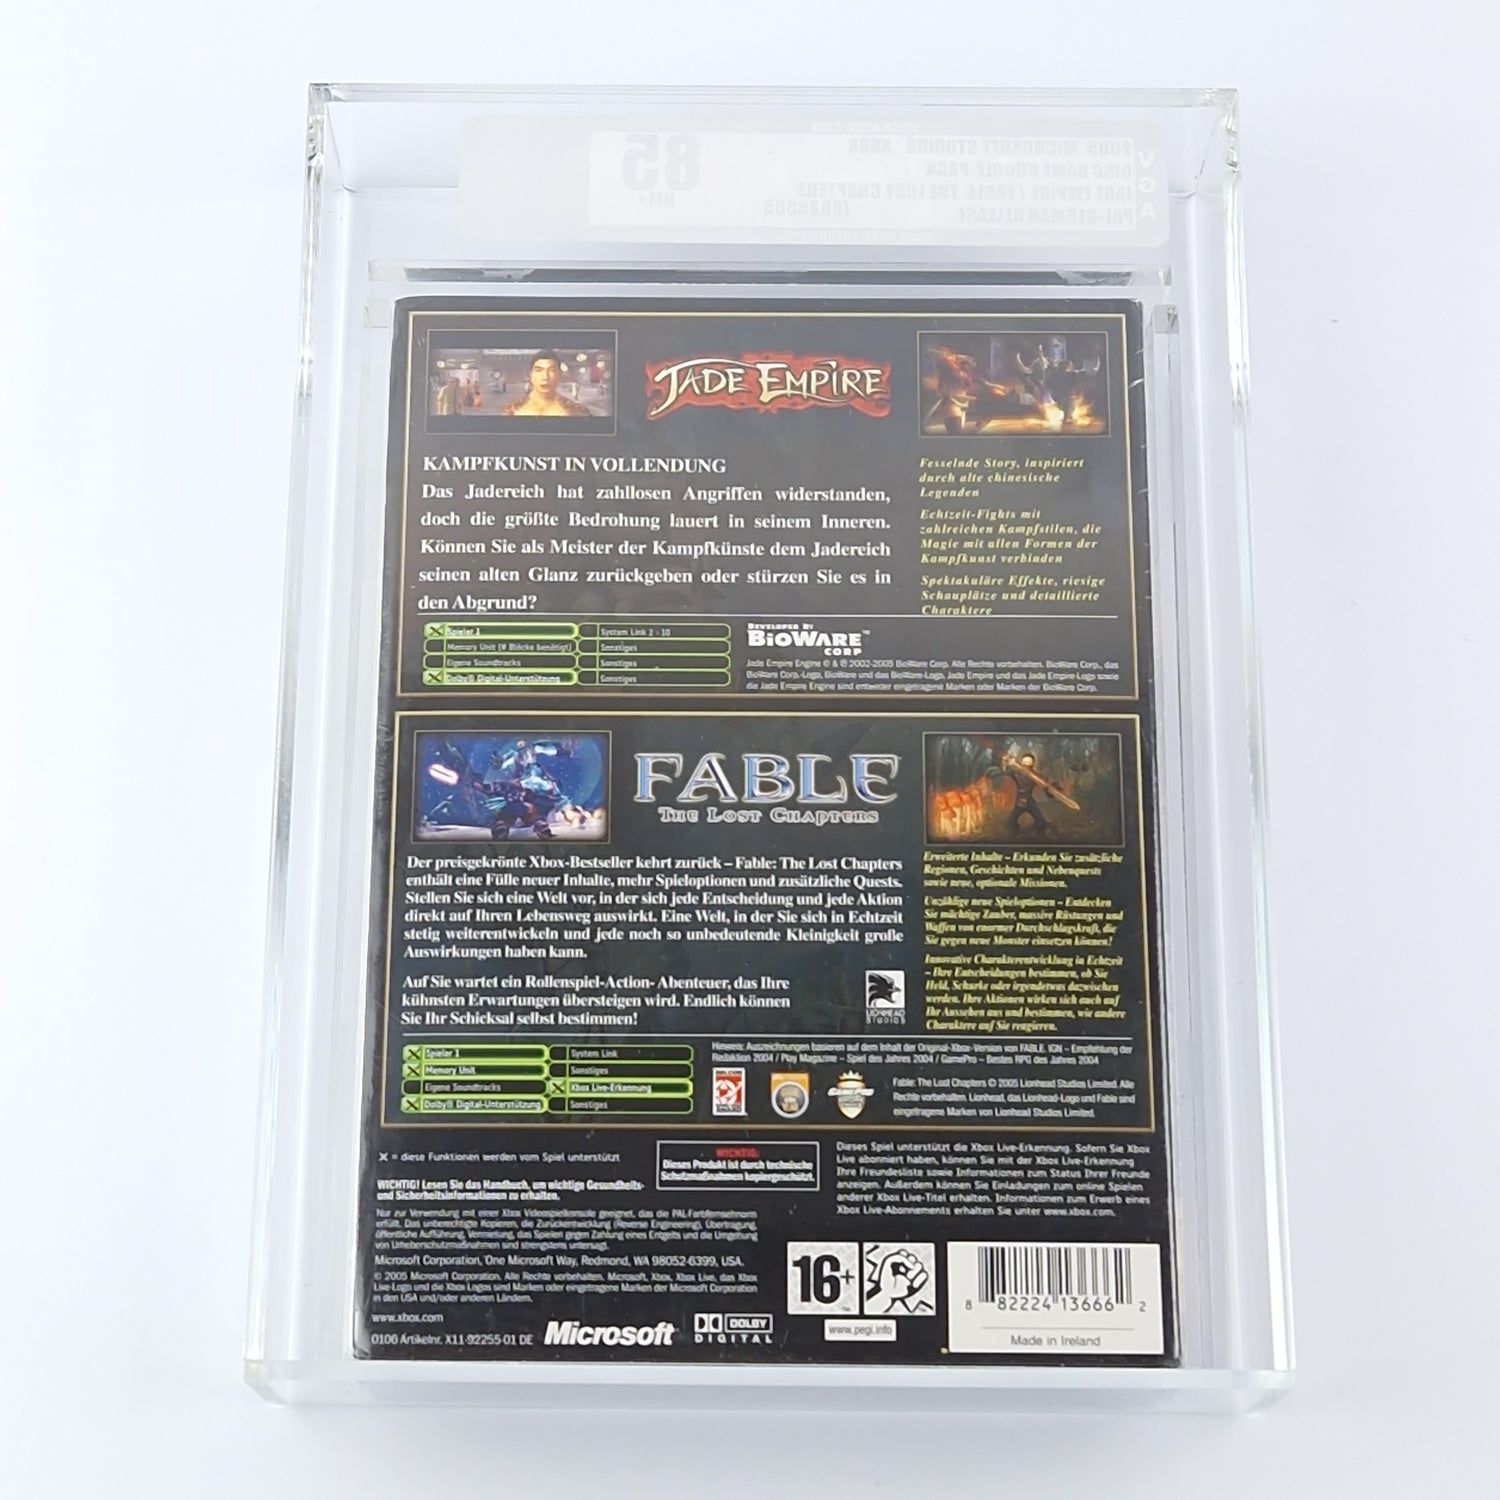 Xbox Classic Spiel : Adventure Doppelpack - Fable & Jade Empire | VGA Grading 85